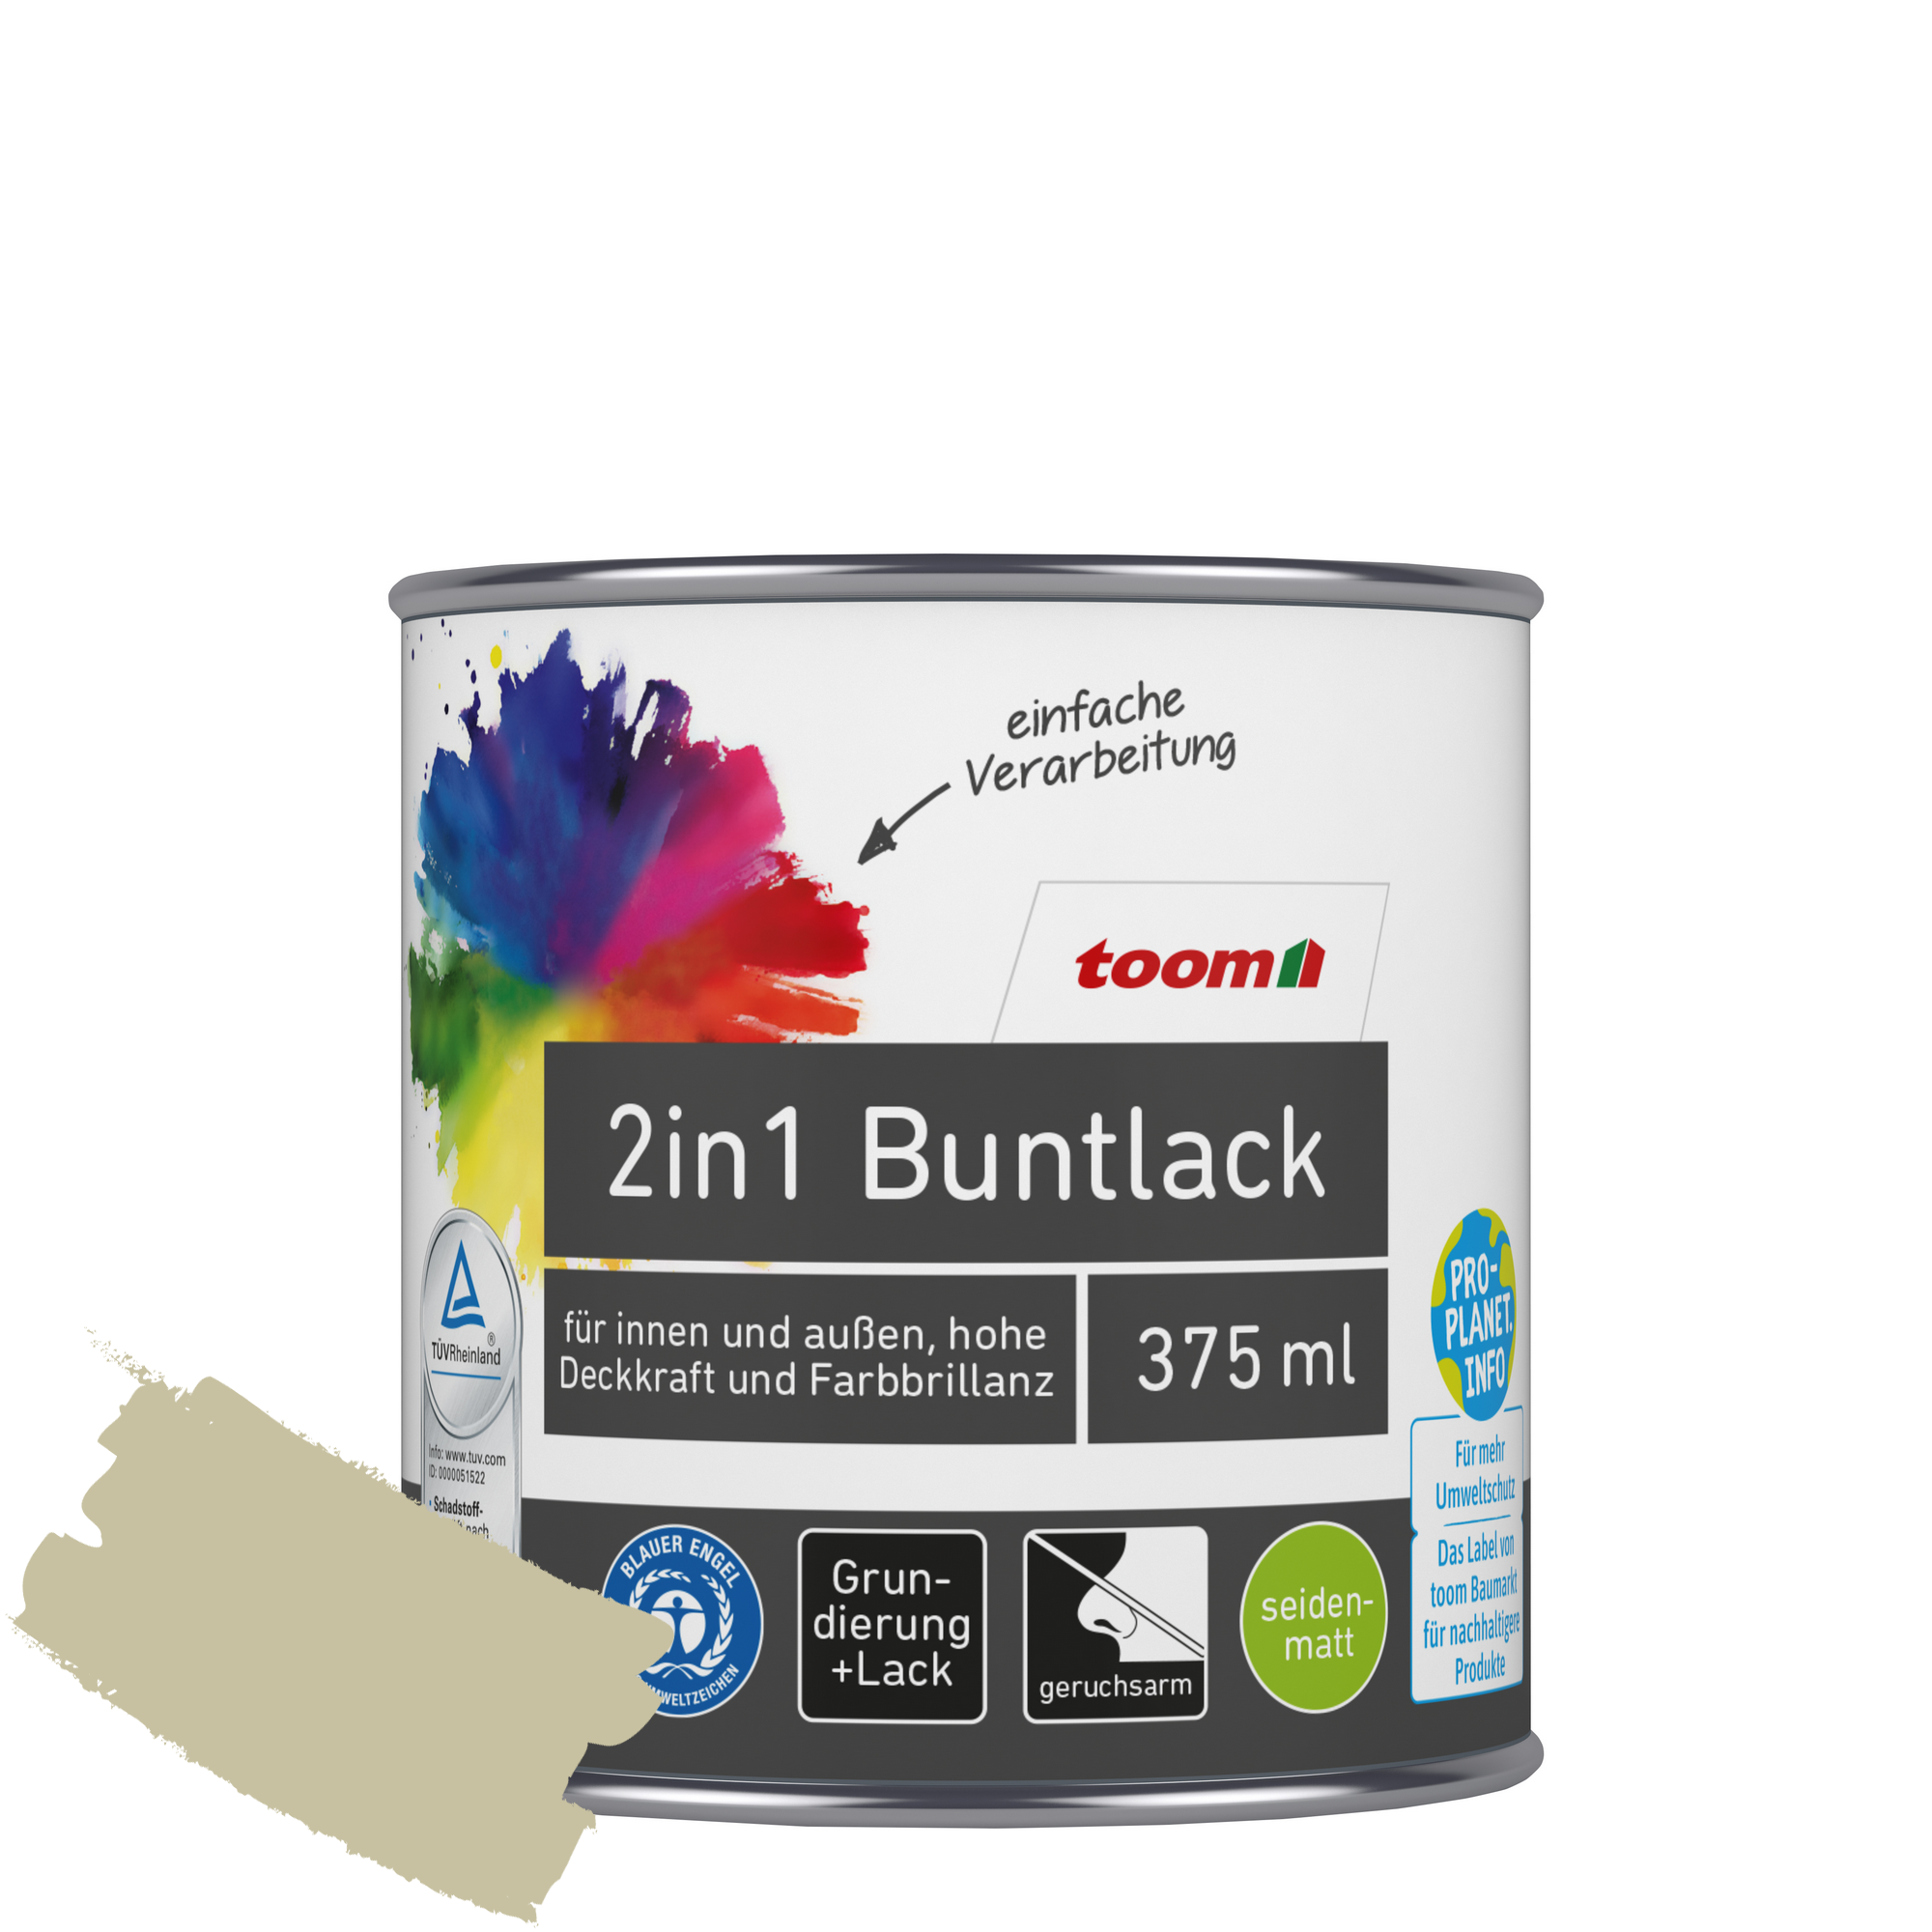 2in1 Buntlack 'Salbeiduft' zartgrün seidenmatt 375 ml + product picture